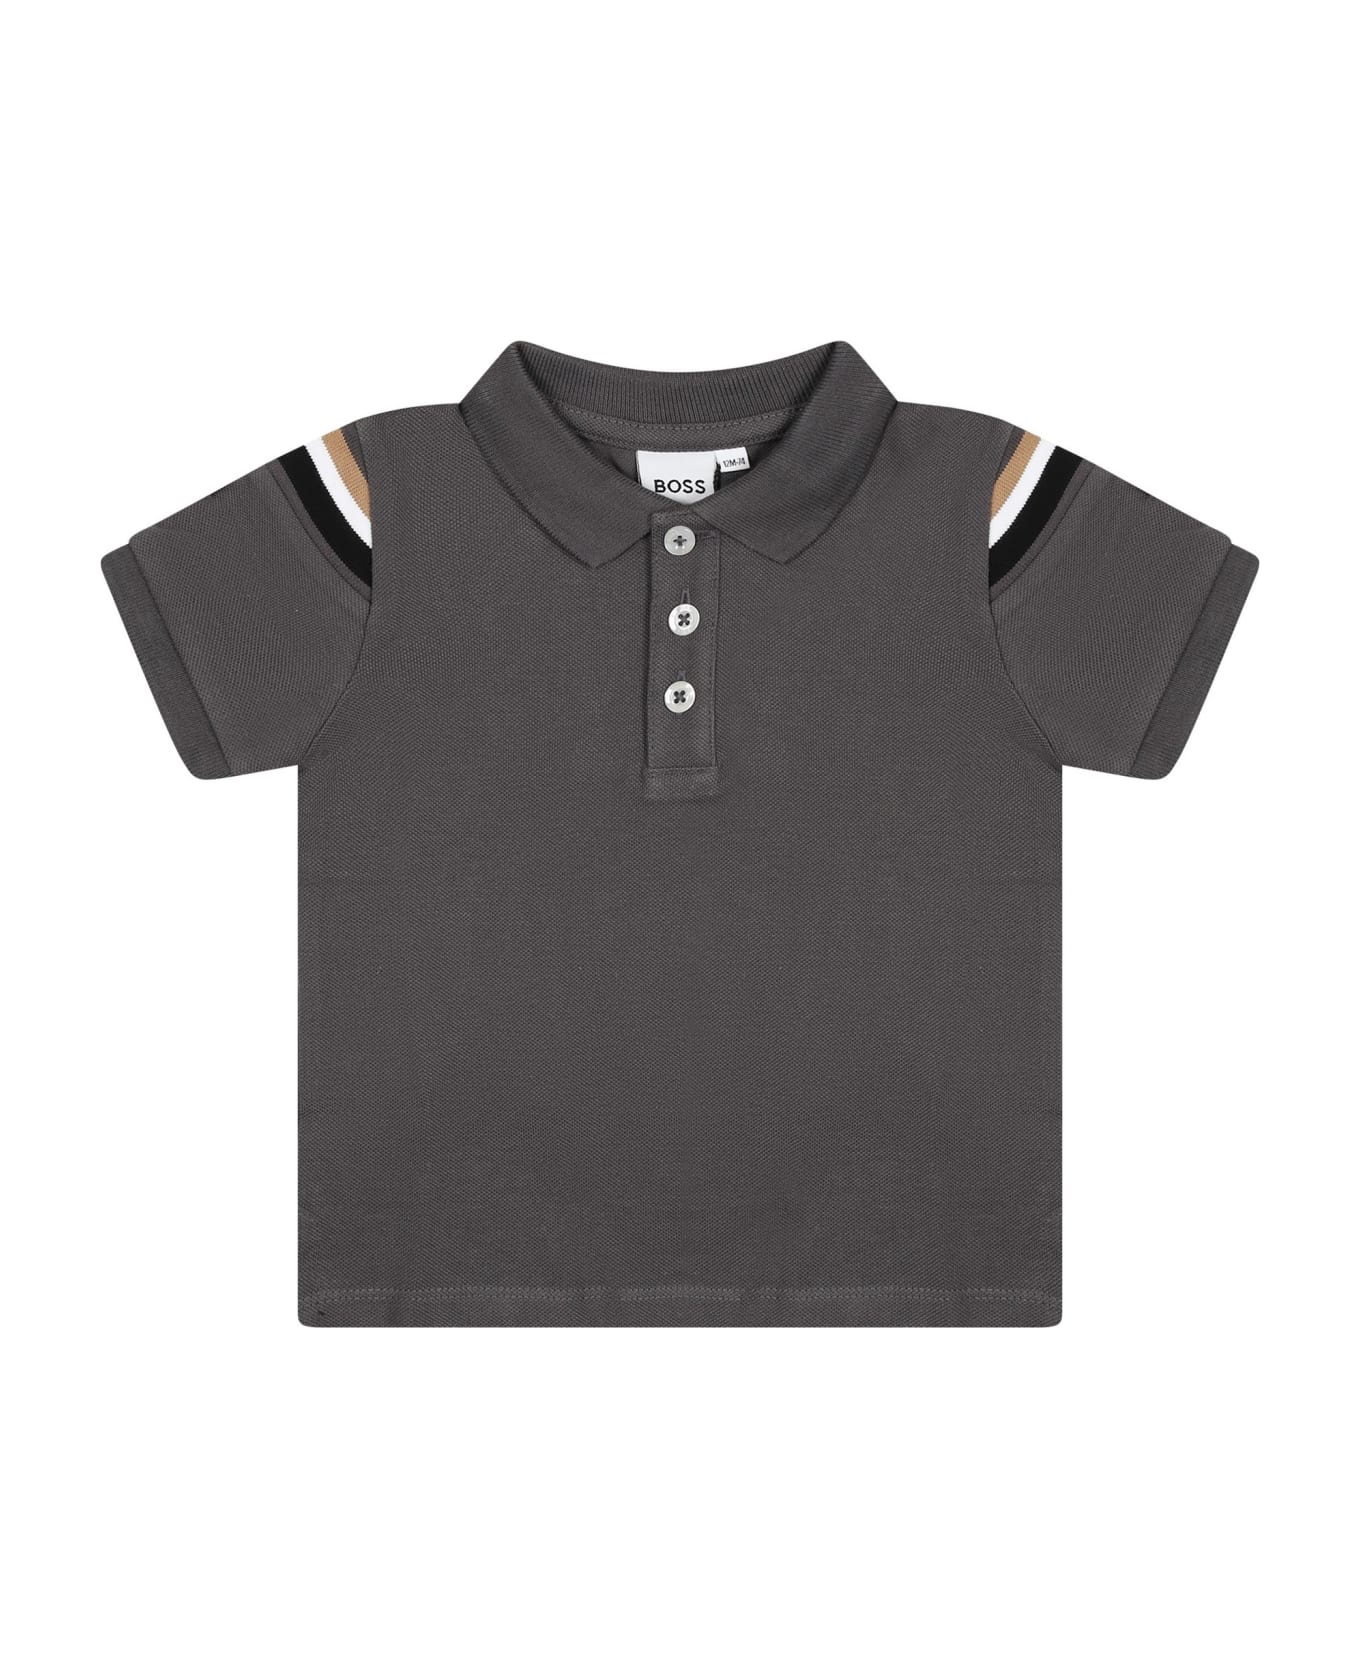 Hugo Boss Gray Polo Shirt For Baby Boy With Logo - Grey